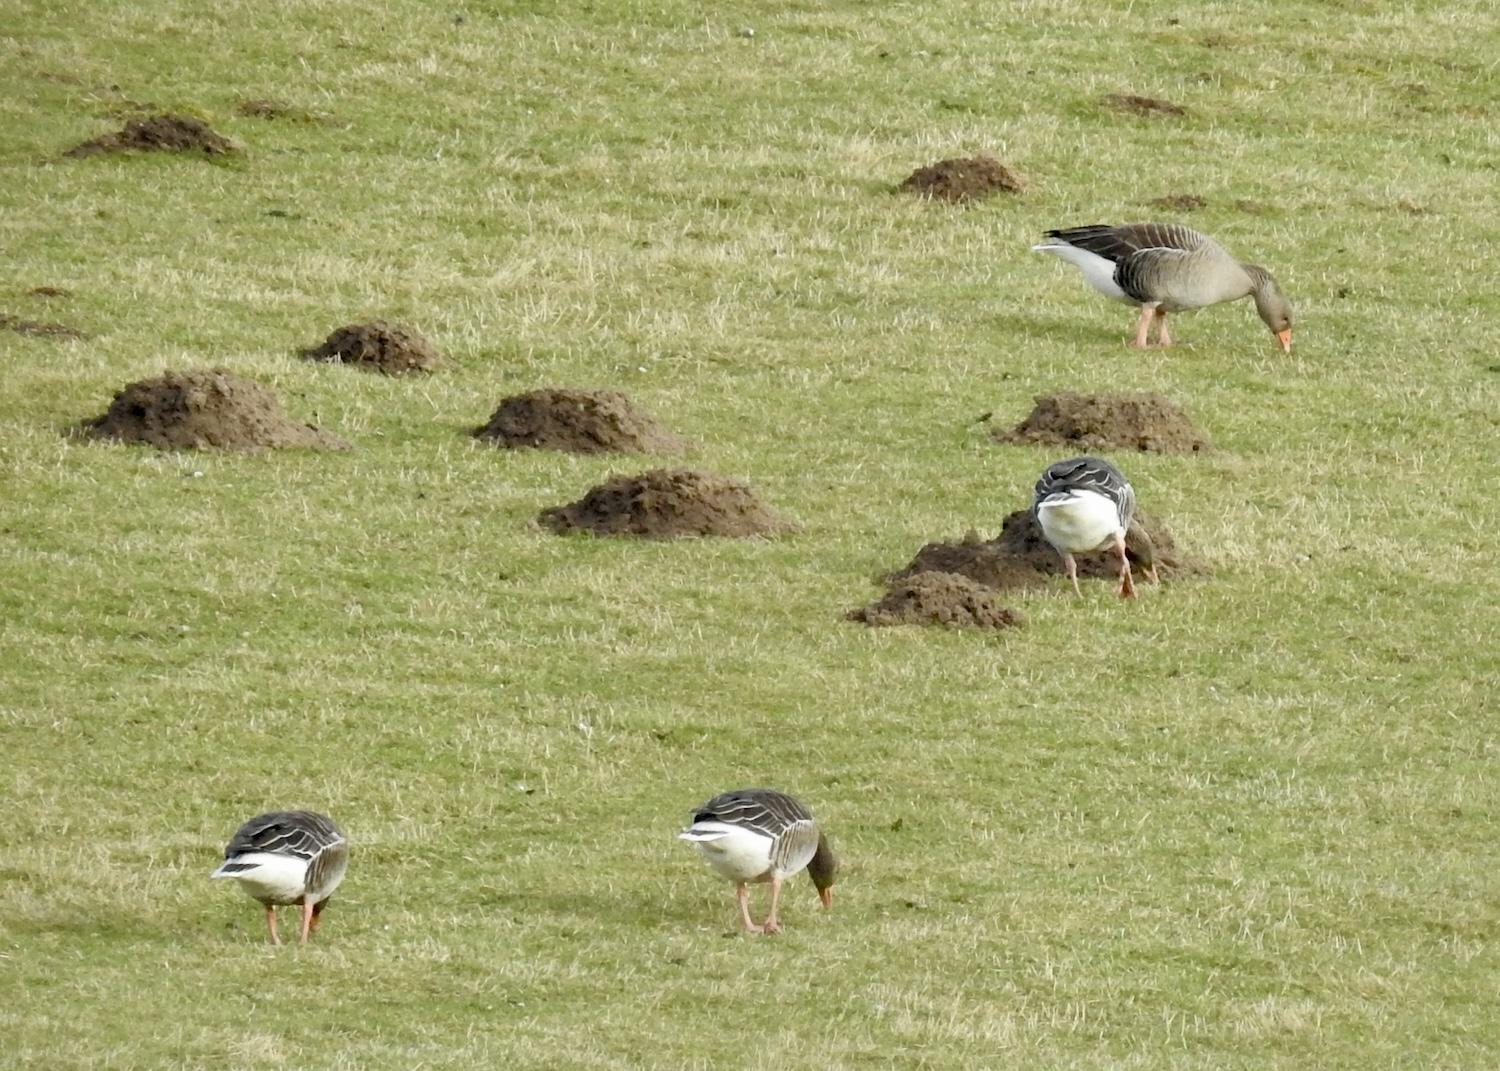 Greylag geese feed in a field full of molehills near Insh Marshes.